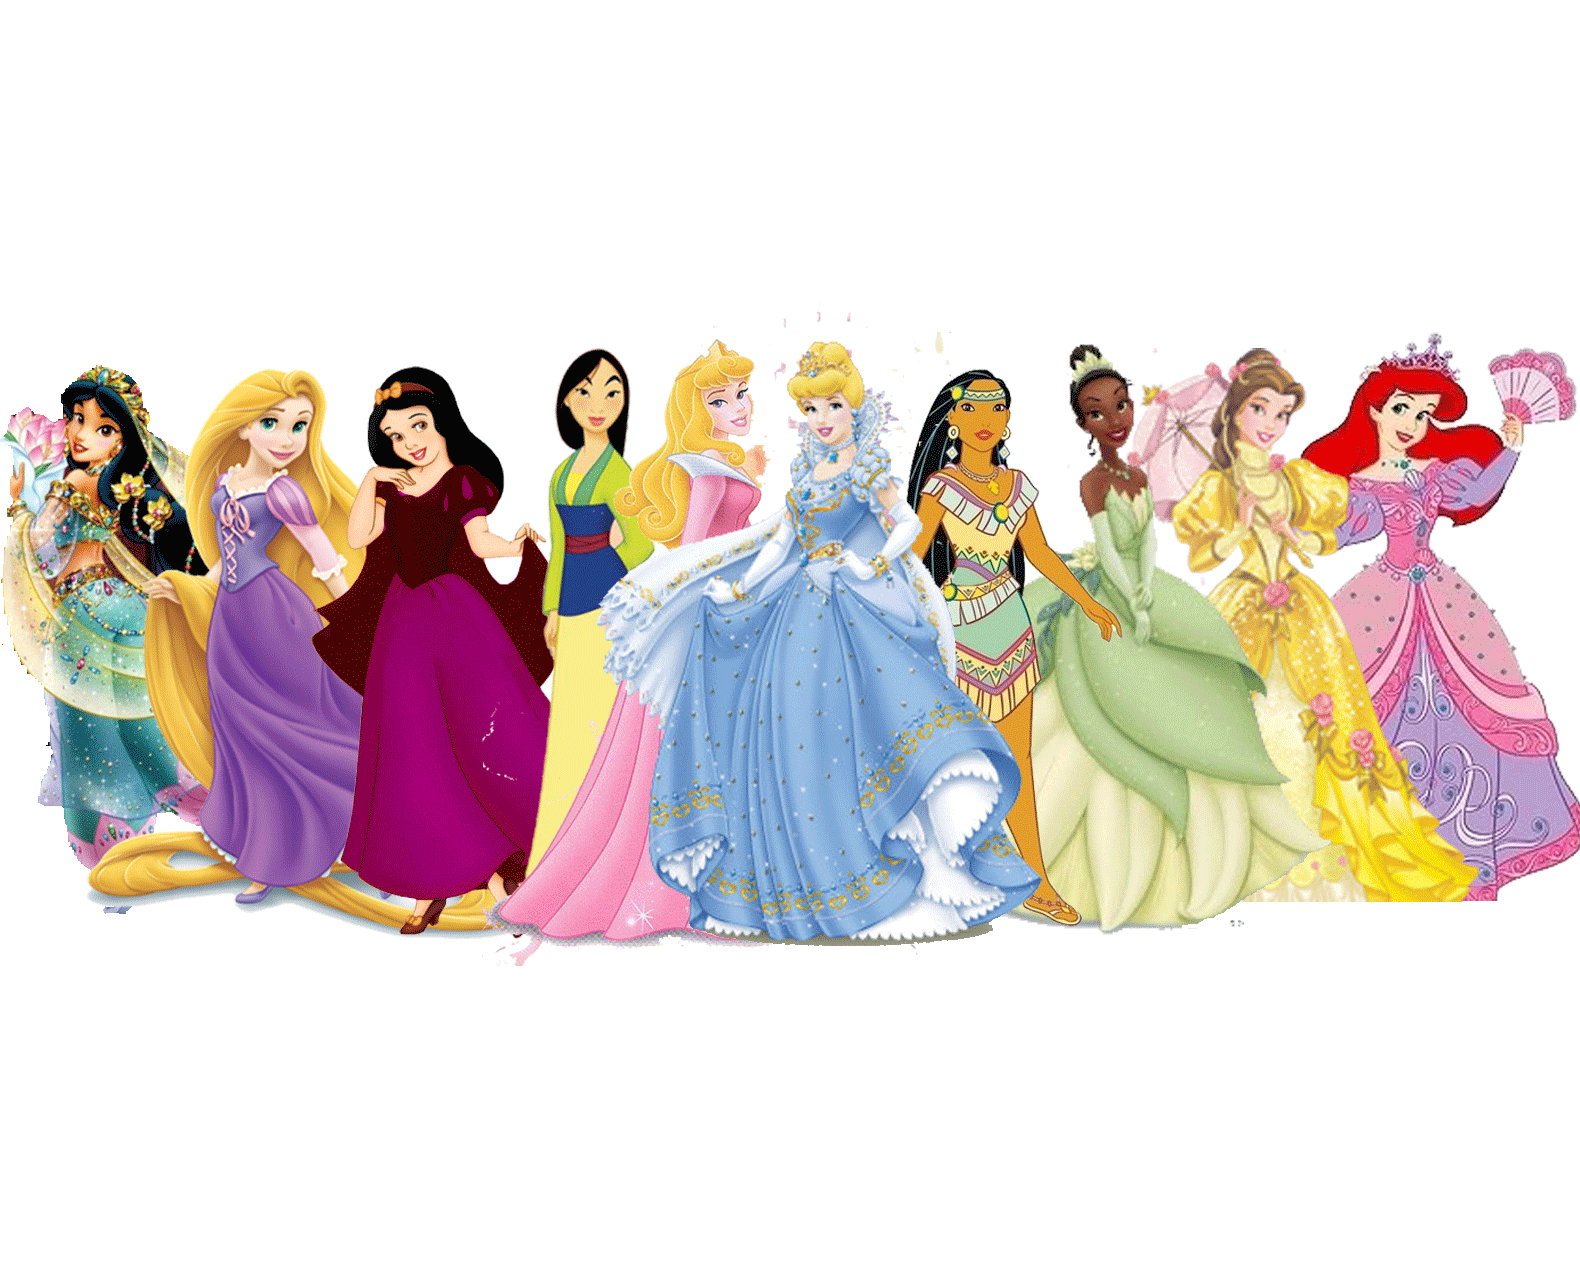 Disney Princess Desktop Image Wallpaper